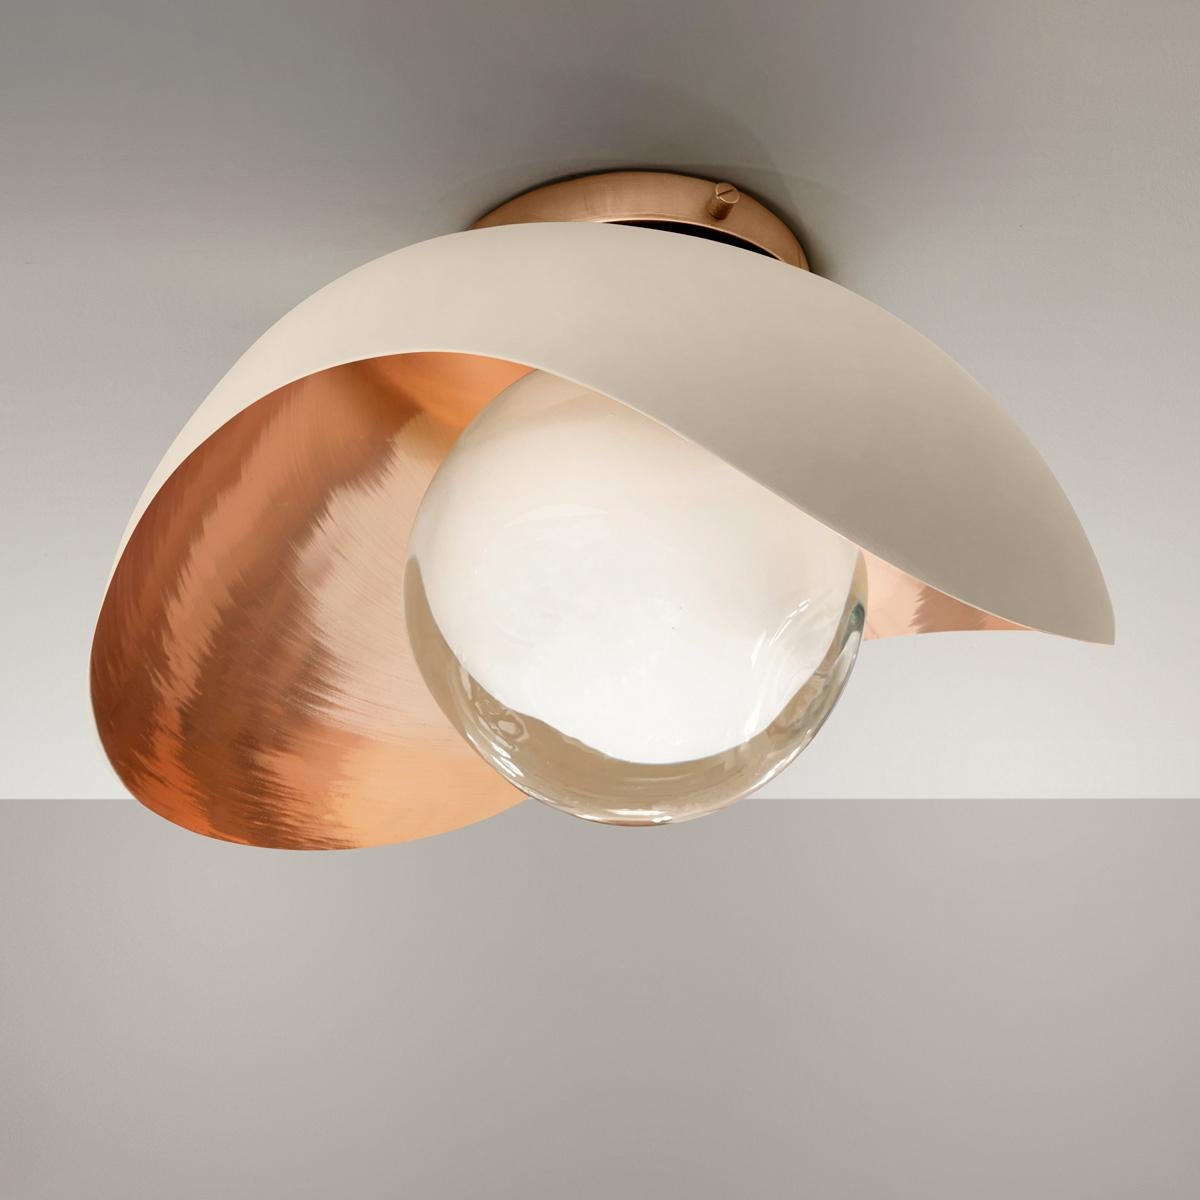 Perla Flushmount Ceiling Light by Gaspare Asaro-Satin Brass/Acqua Finish For Sale 4